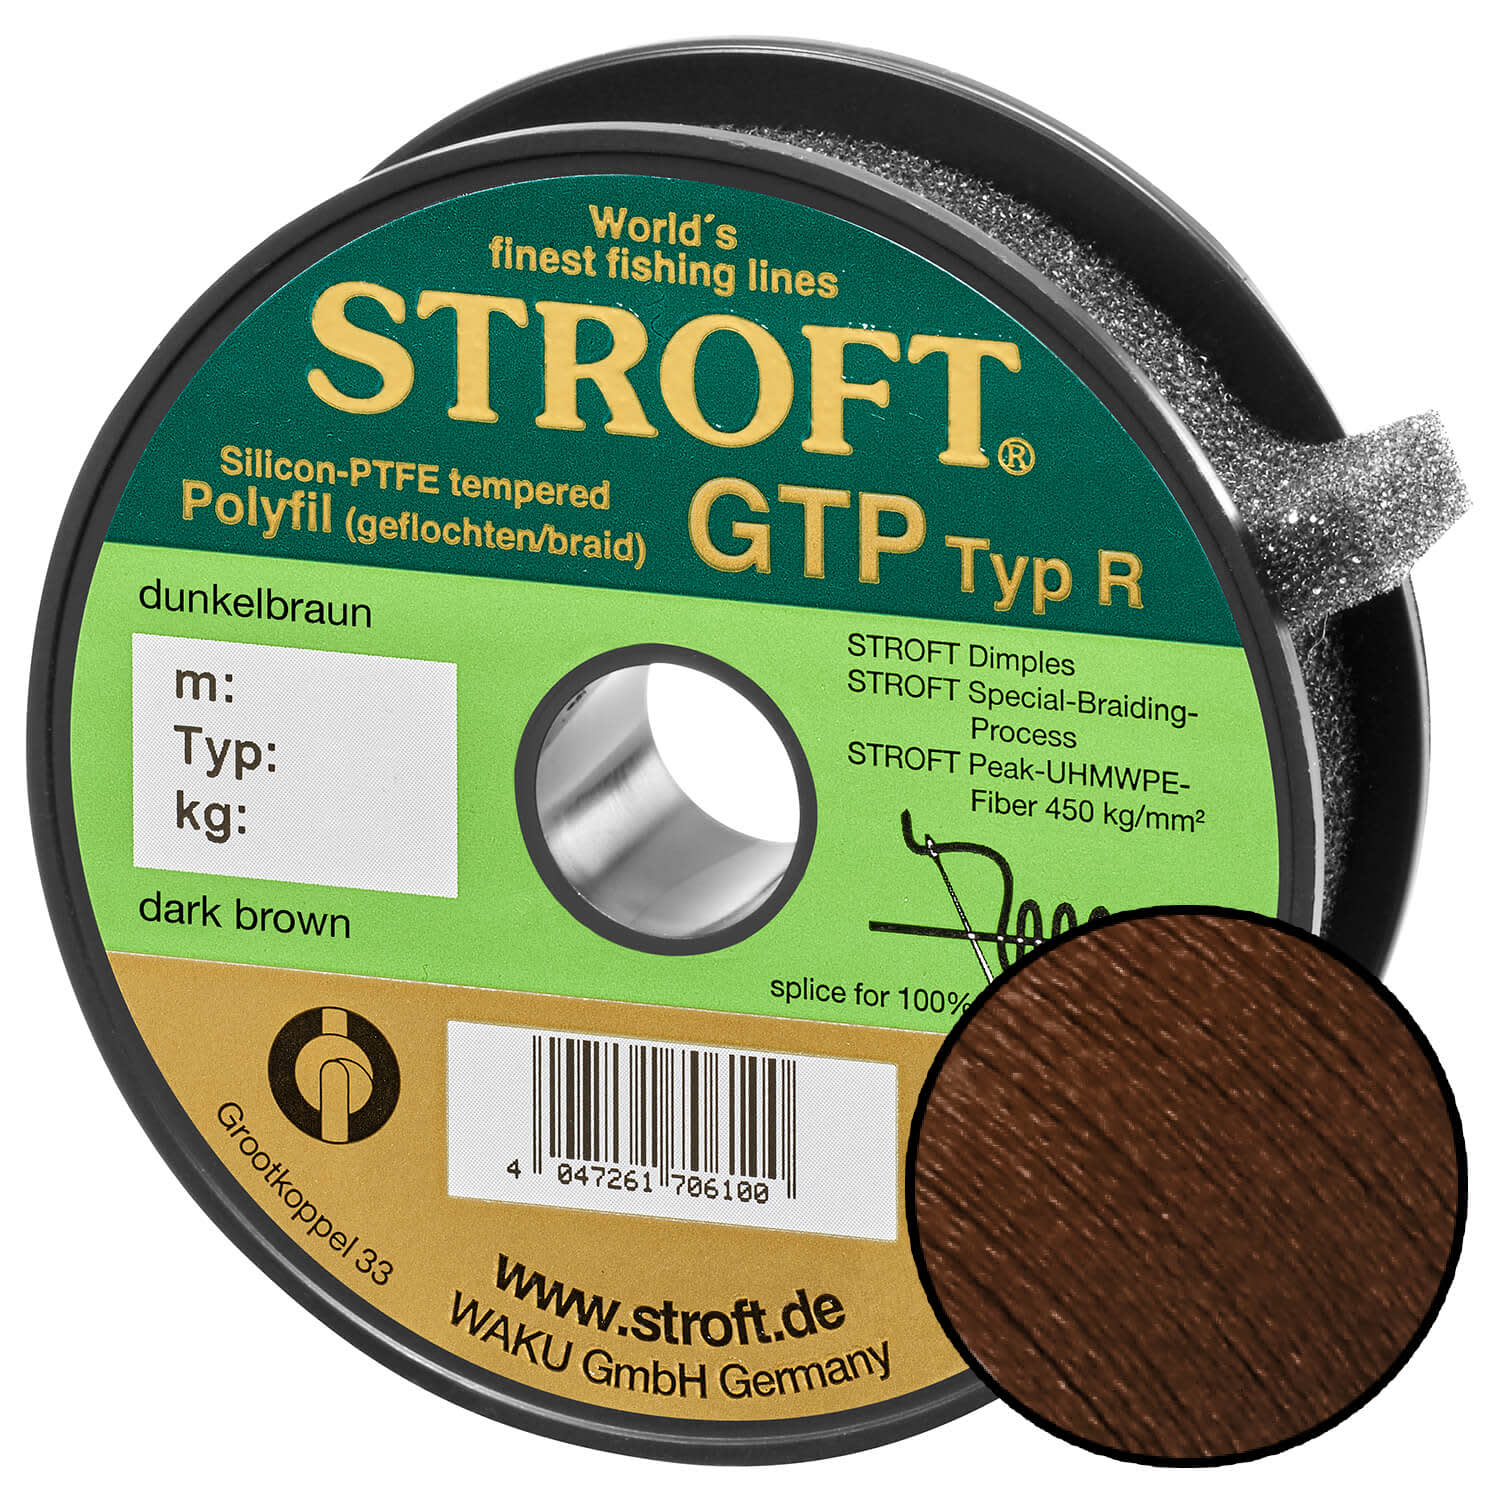 STROFT GTP Type R Braided Fishing Line 200m darkbrown buy by Koeder Laden